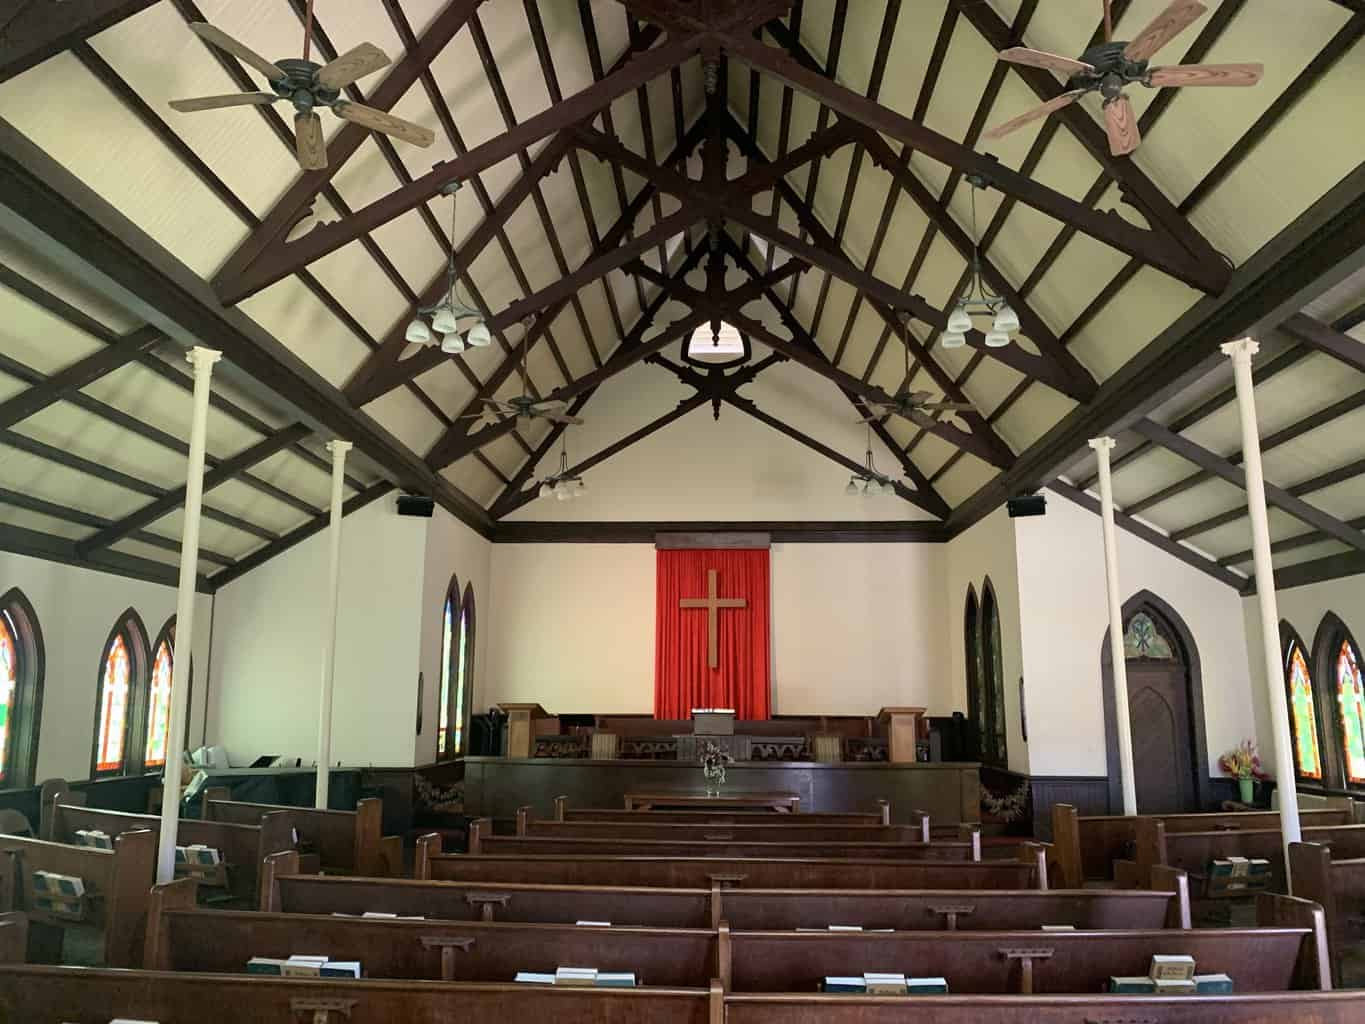 Hanalei Church